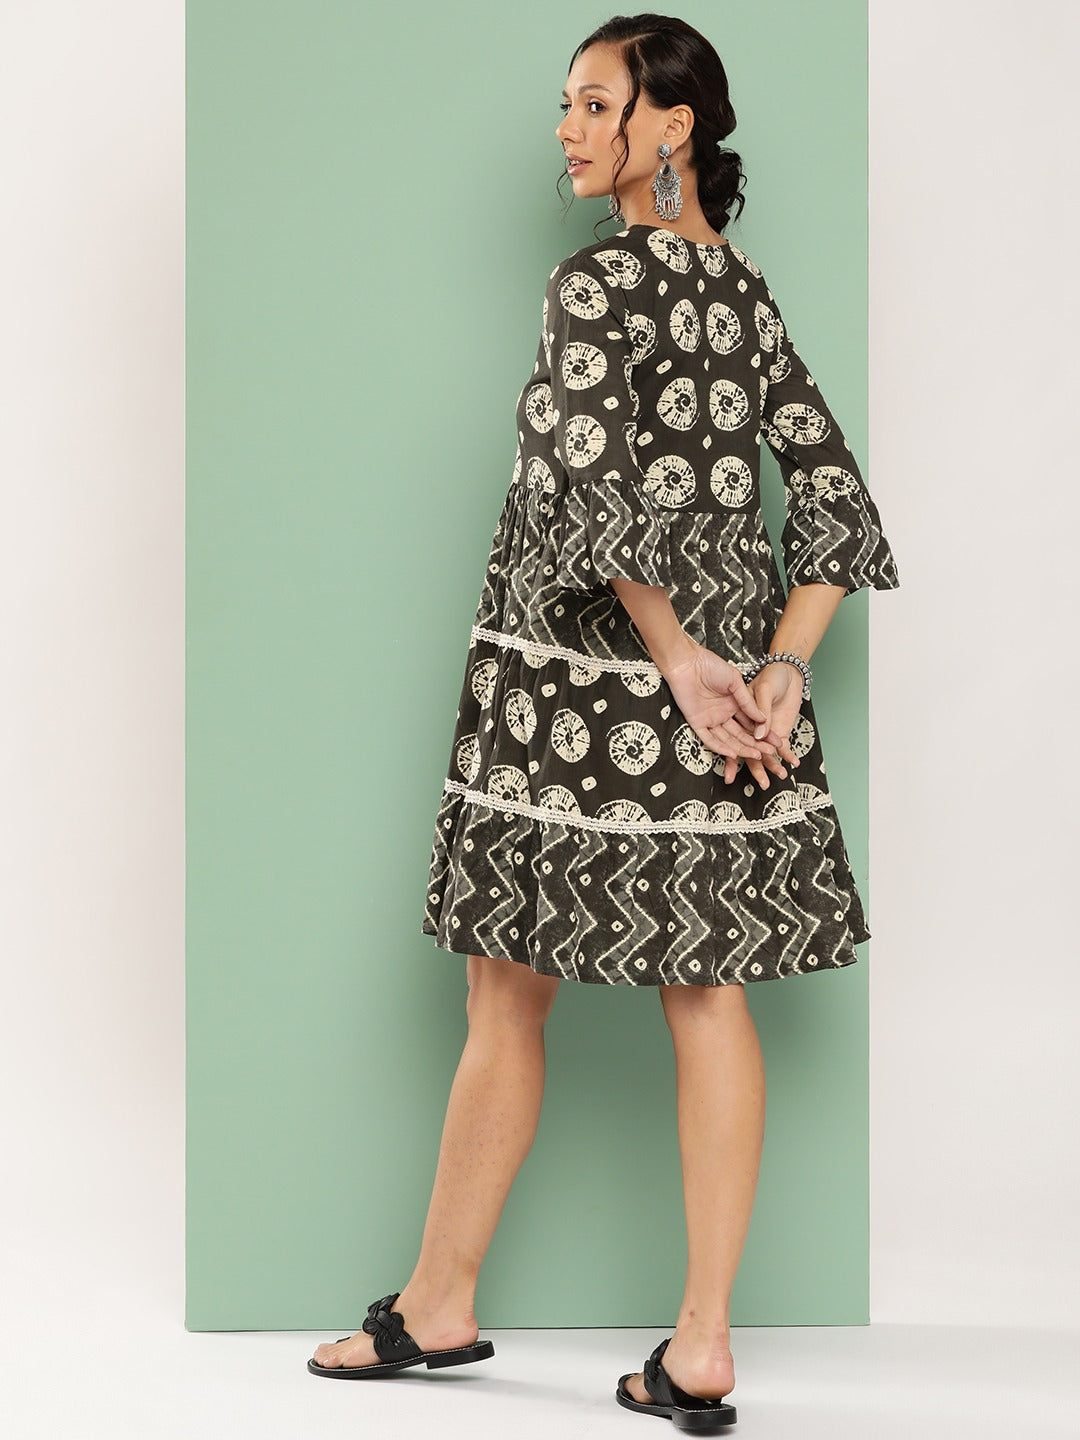 Ethnic Motifs Pure Cotton Dress-Yufta Store-1194DRSBKS